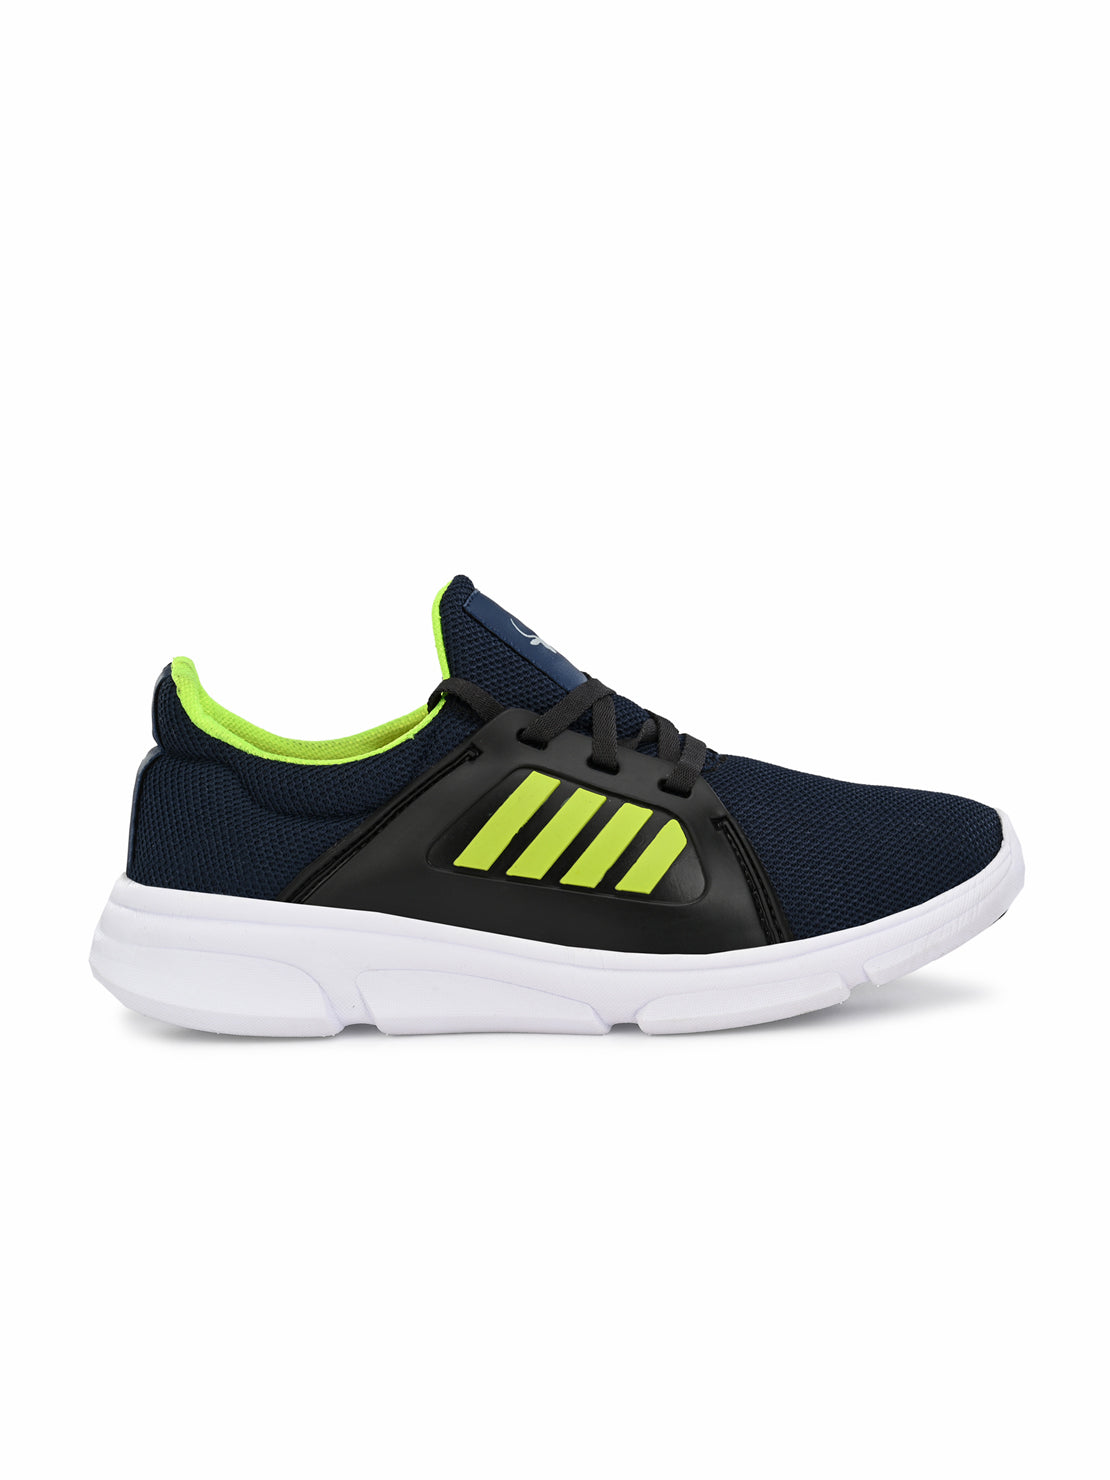 Hirolas® Men's Black/Green Mesh Running/Walking/Gym Lace Up Sneaker Sport Shoes (HRL2003BUG)